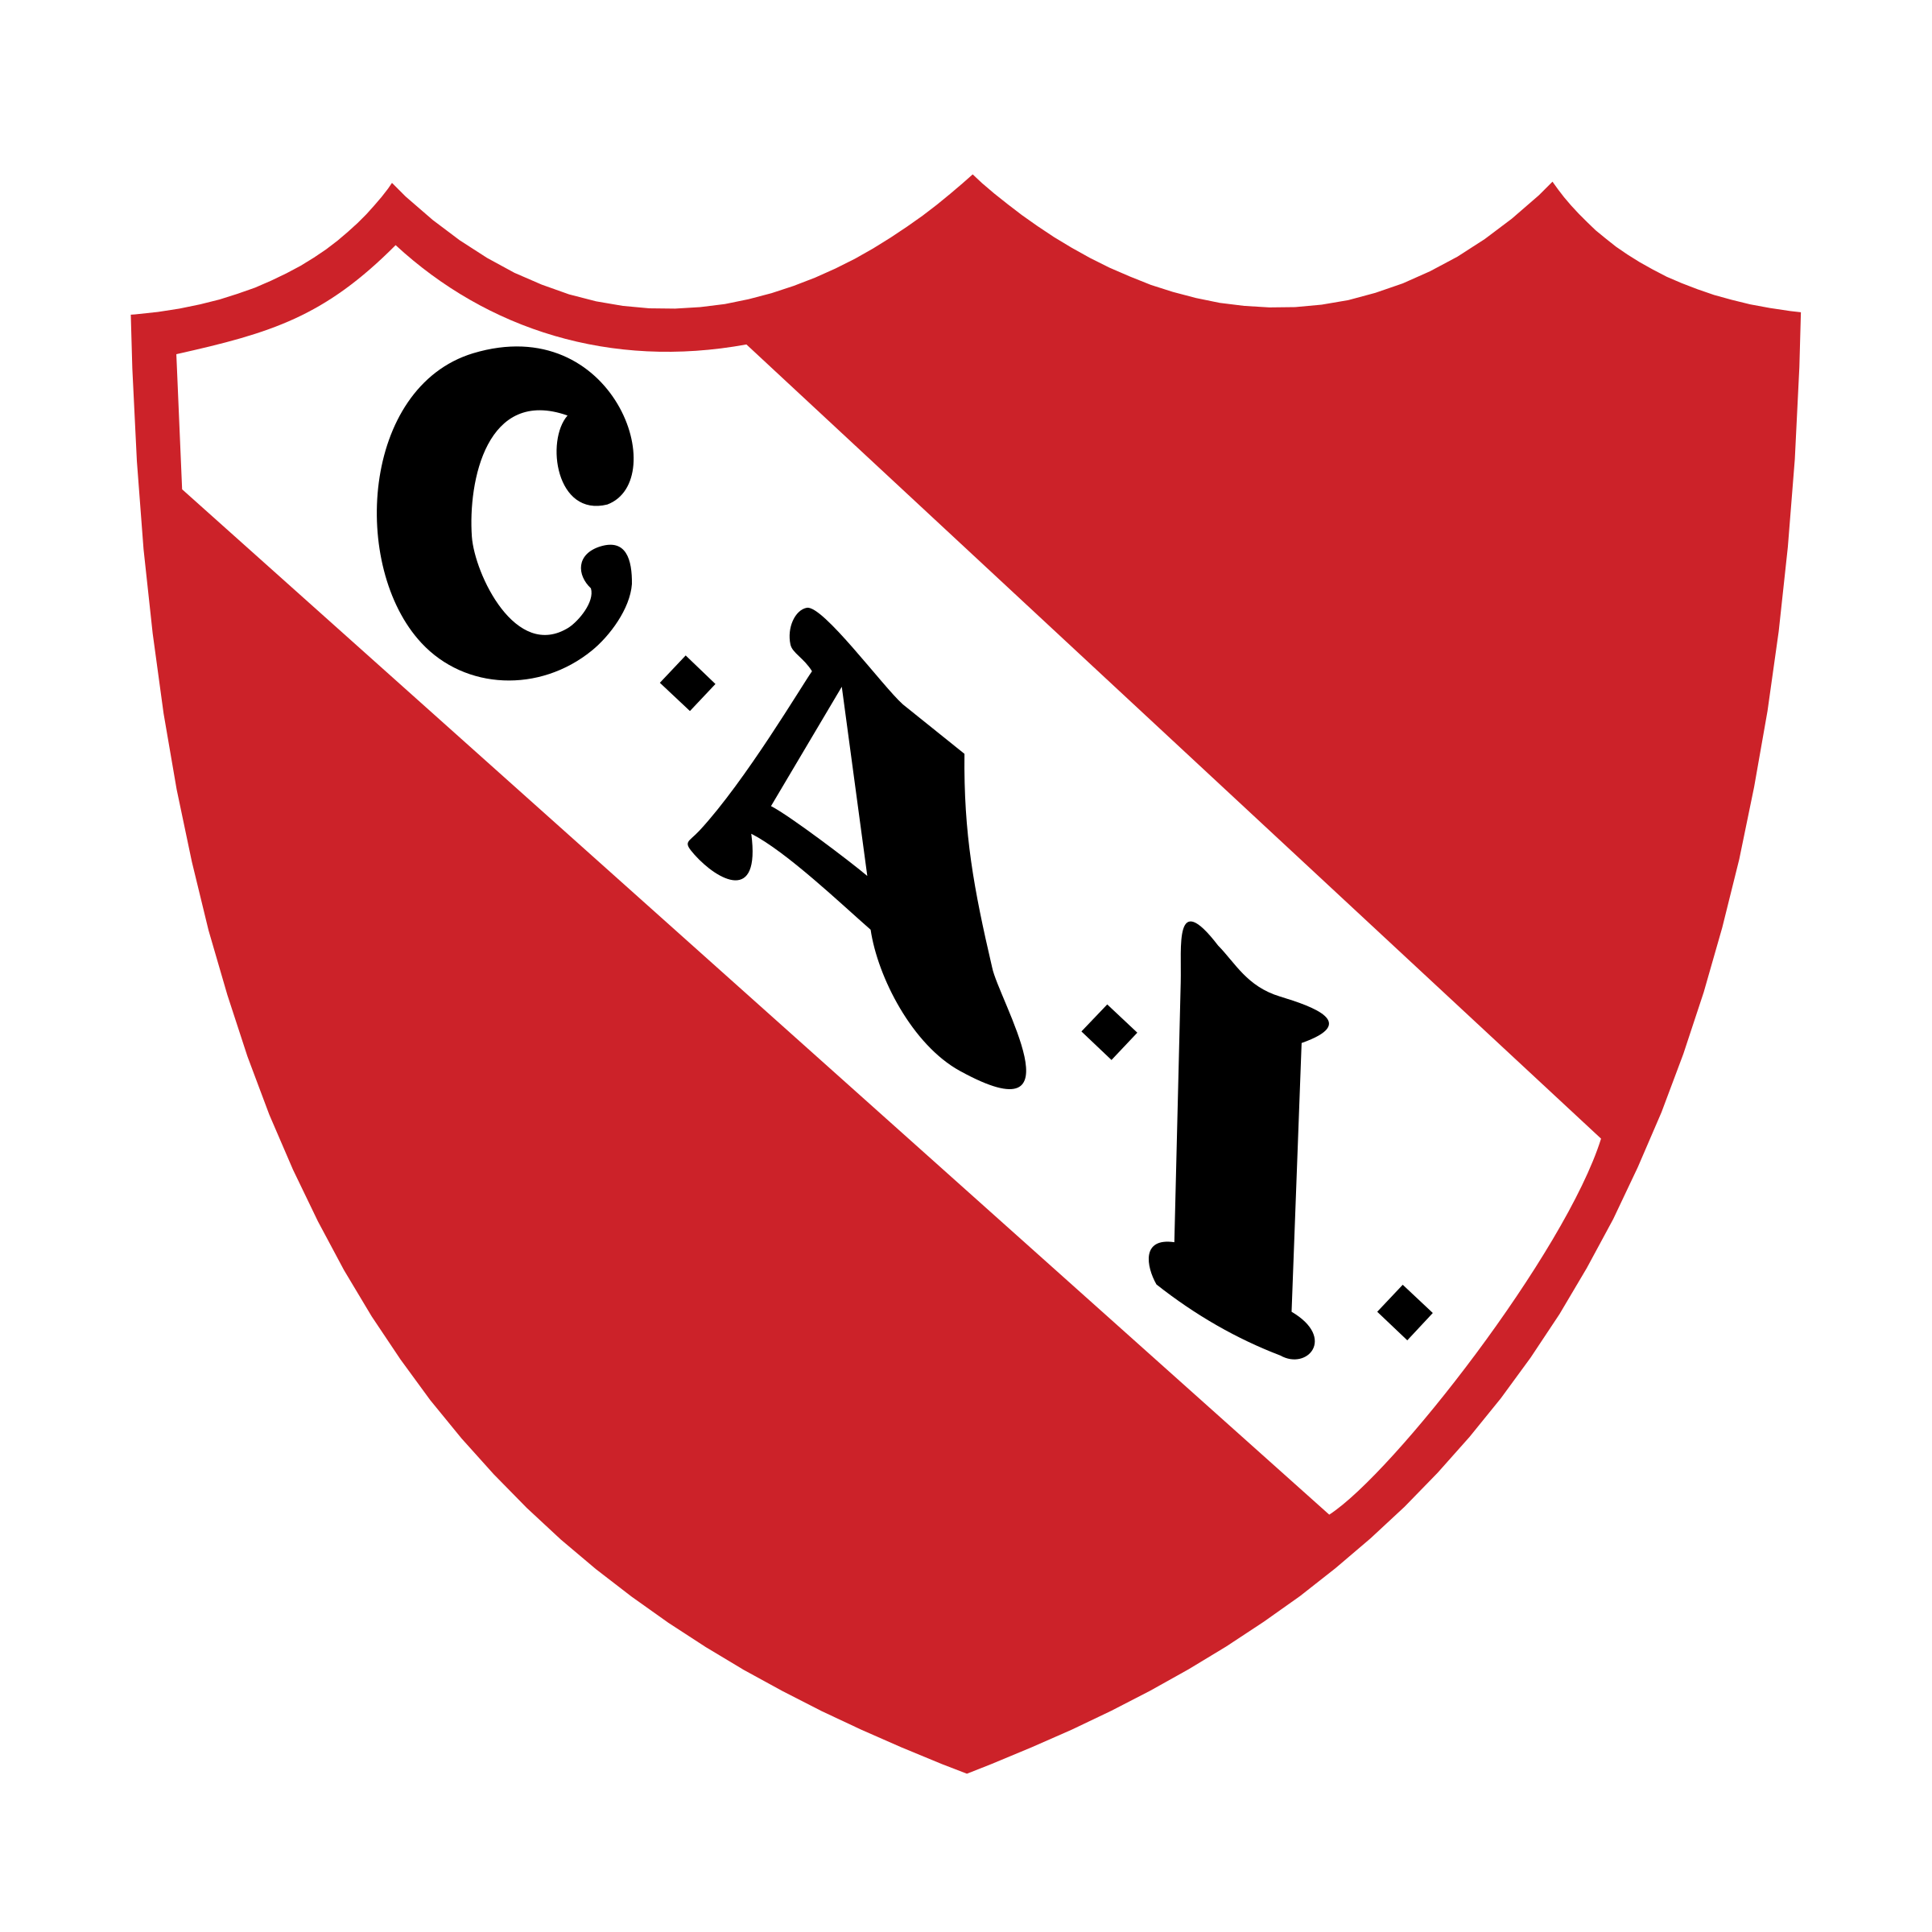 Club AtlÃ©tico Independiente Png & Free Club AtlÃ©tico Independiente.png Transparent Image